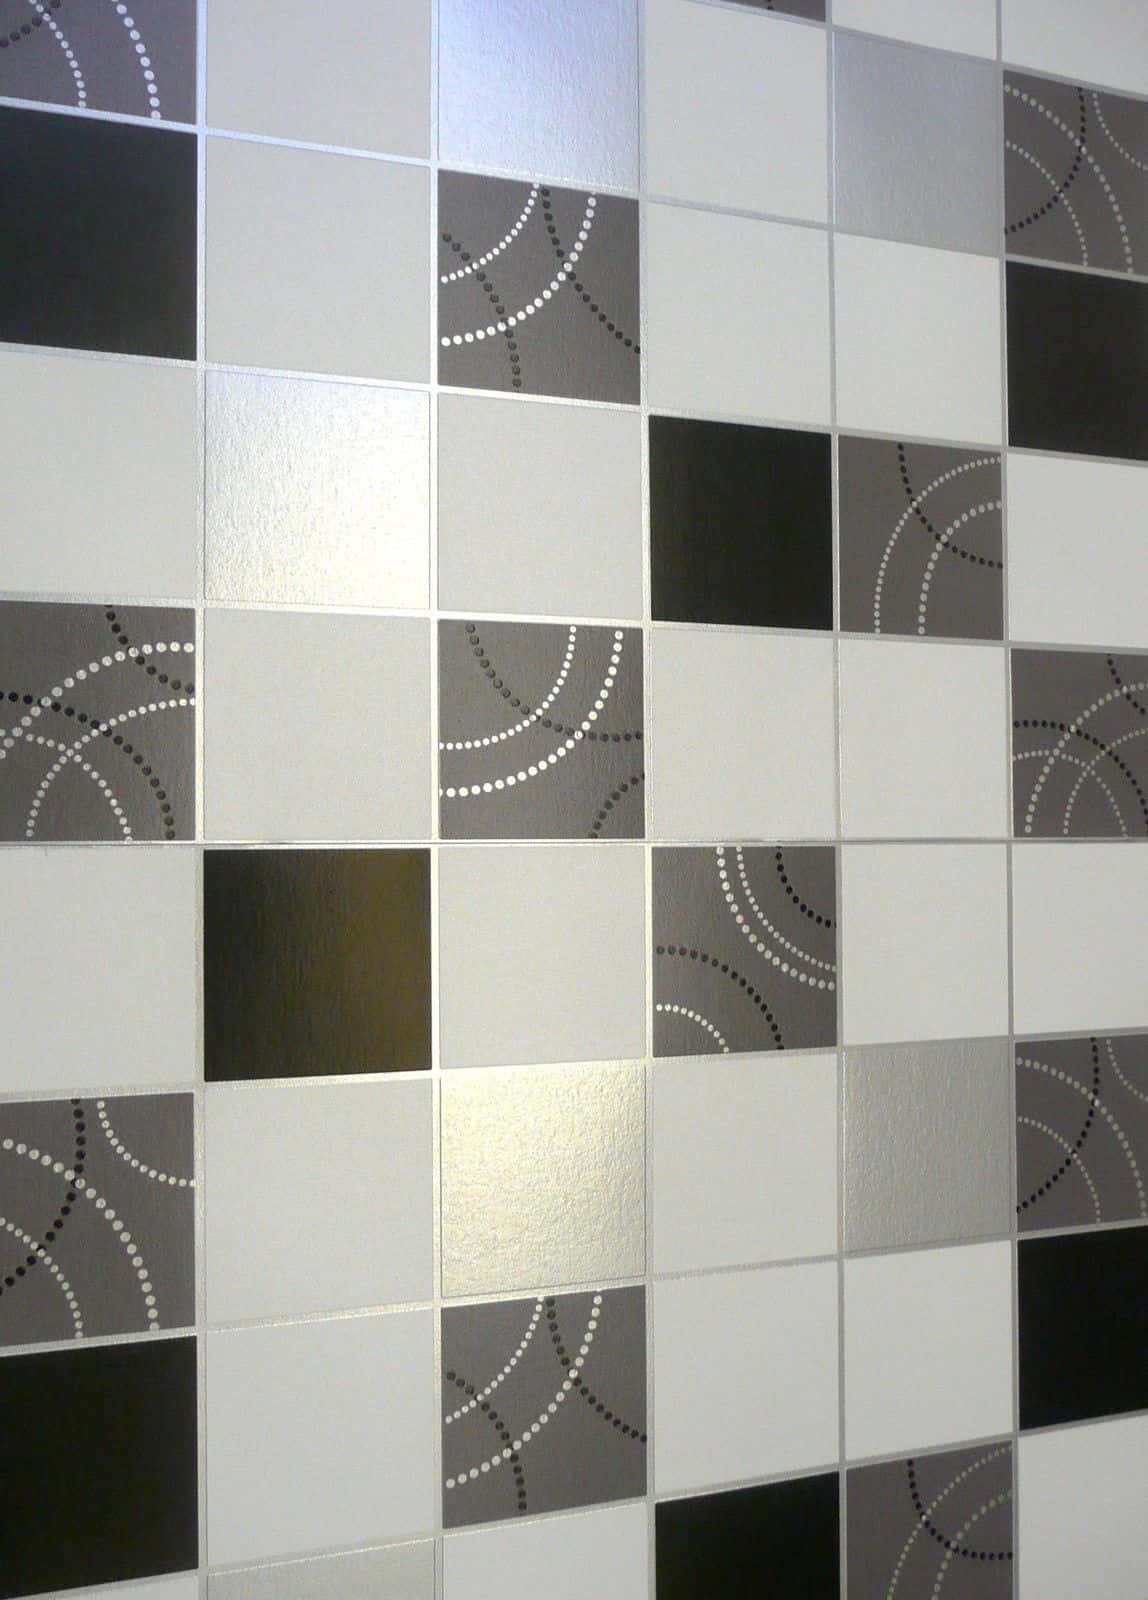 Sort hvid sort grå sølv firkantet mønster billed tapet